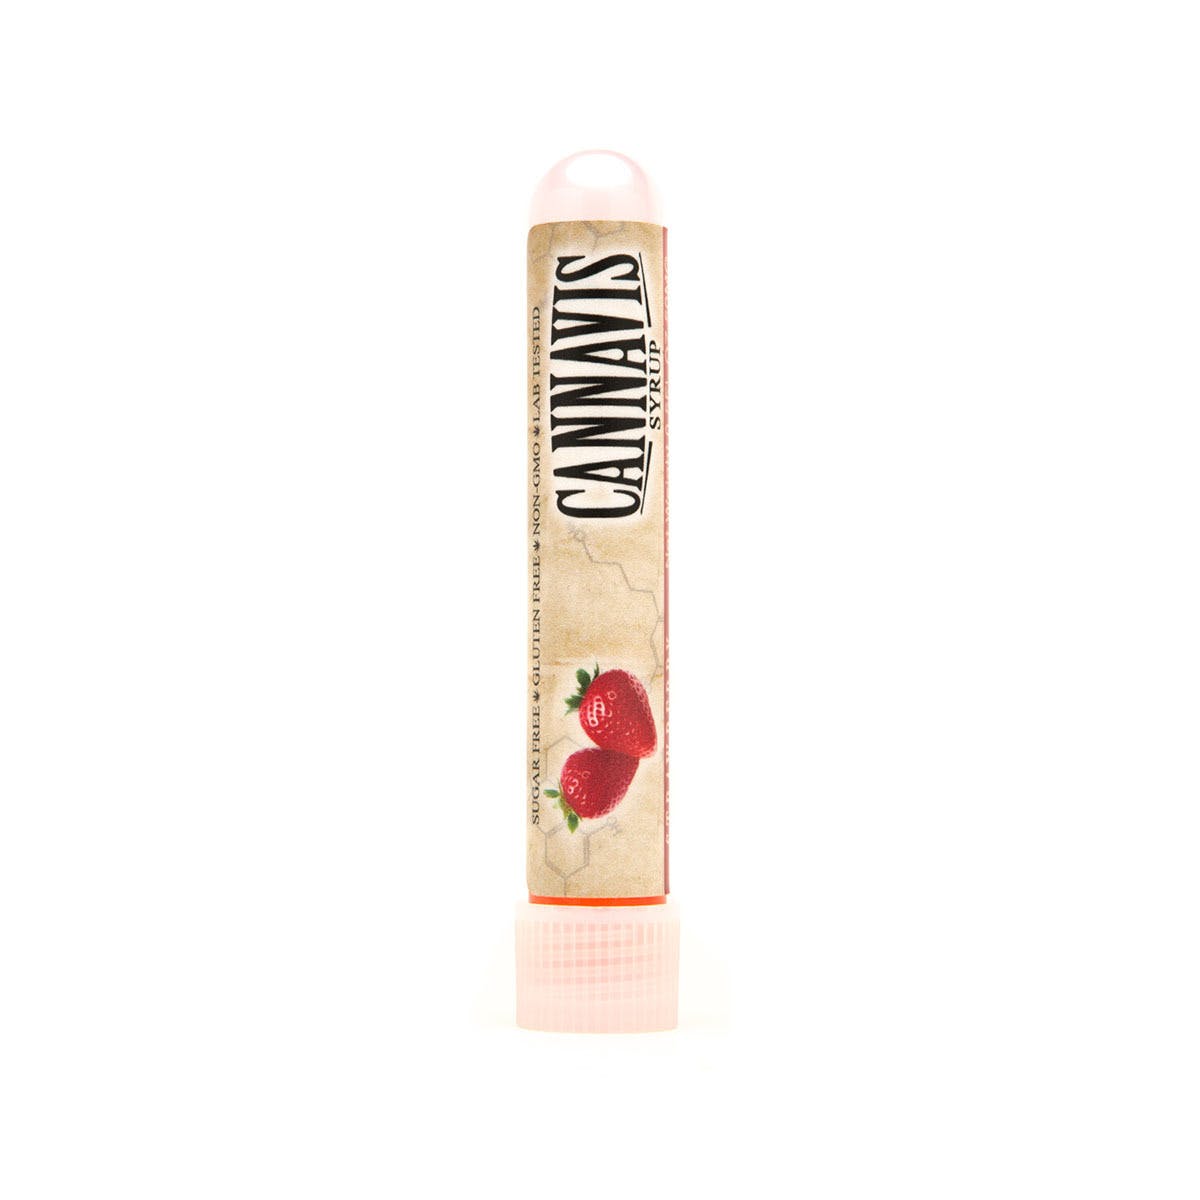 Cannavis Syrup, Strawberry 50mg